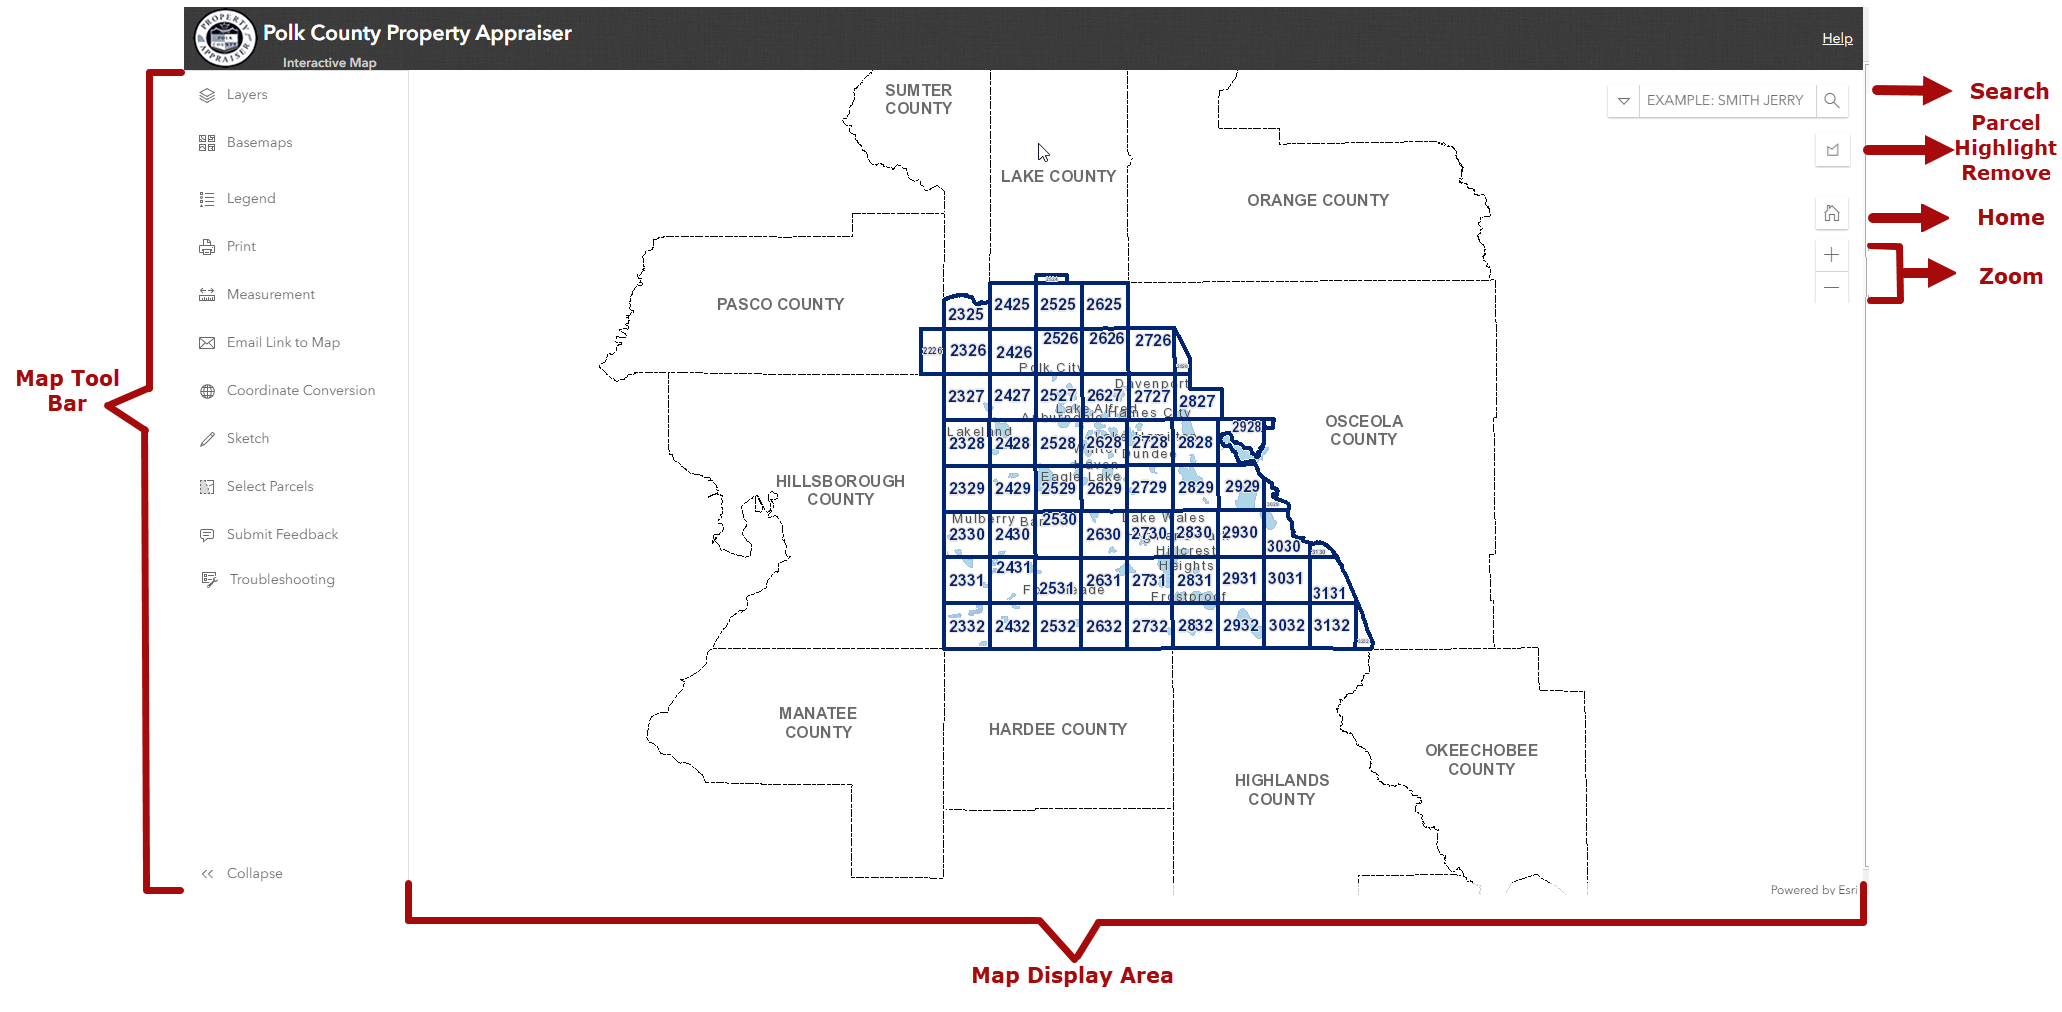 Polk County Property Appraiser Map